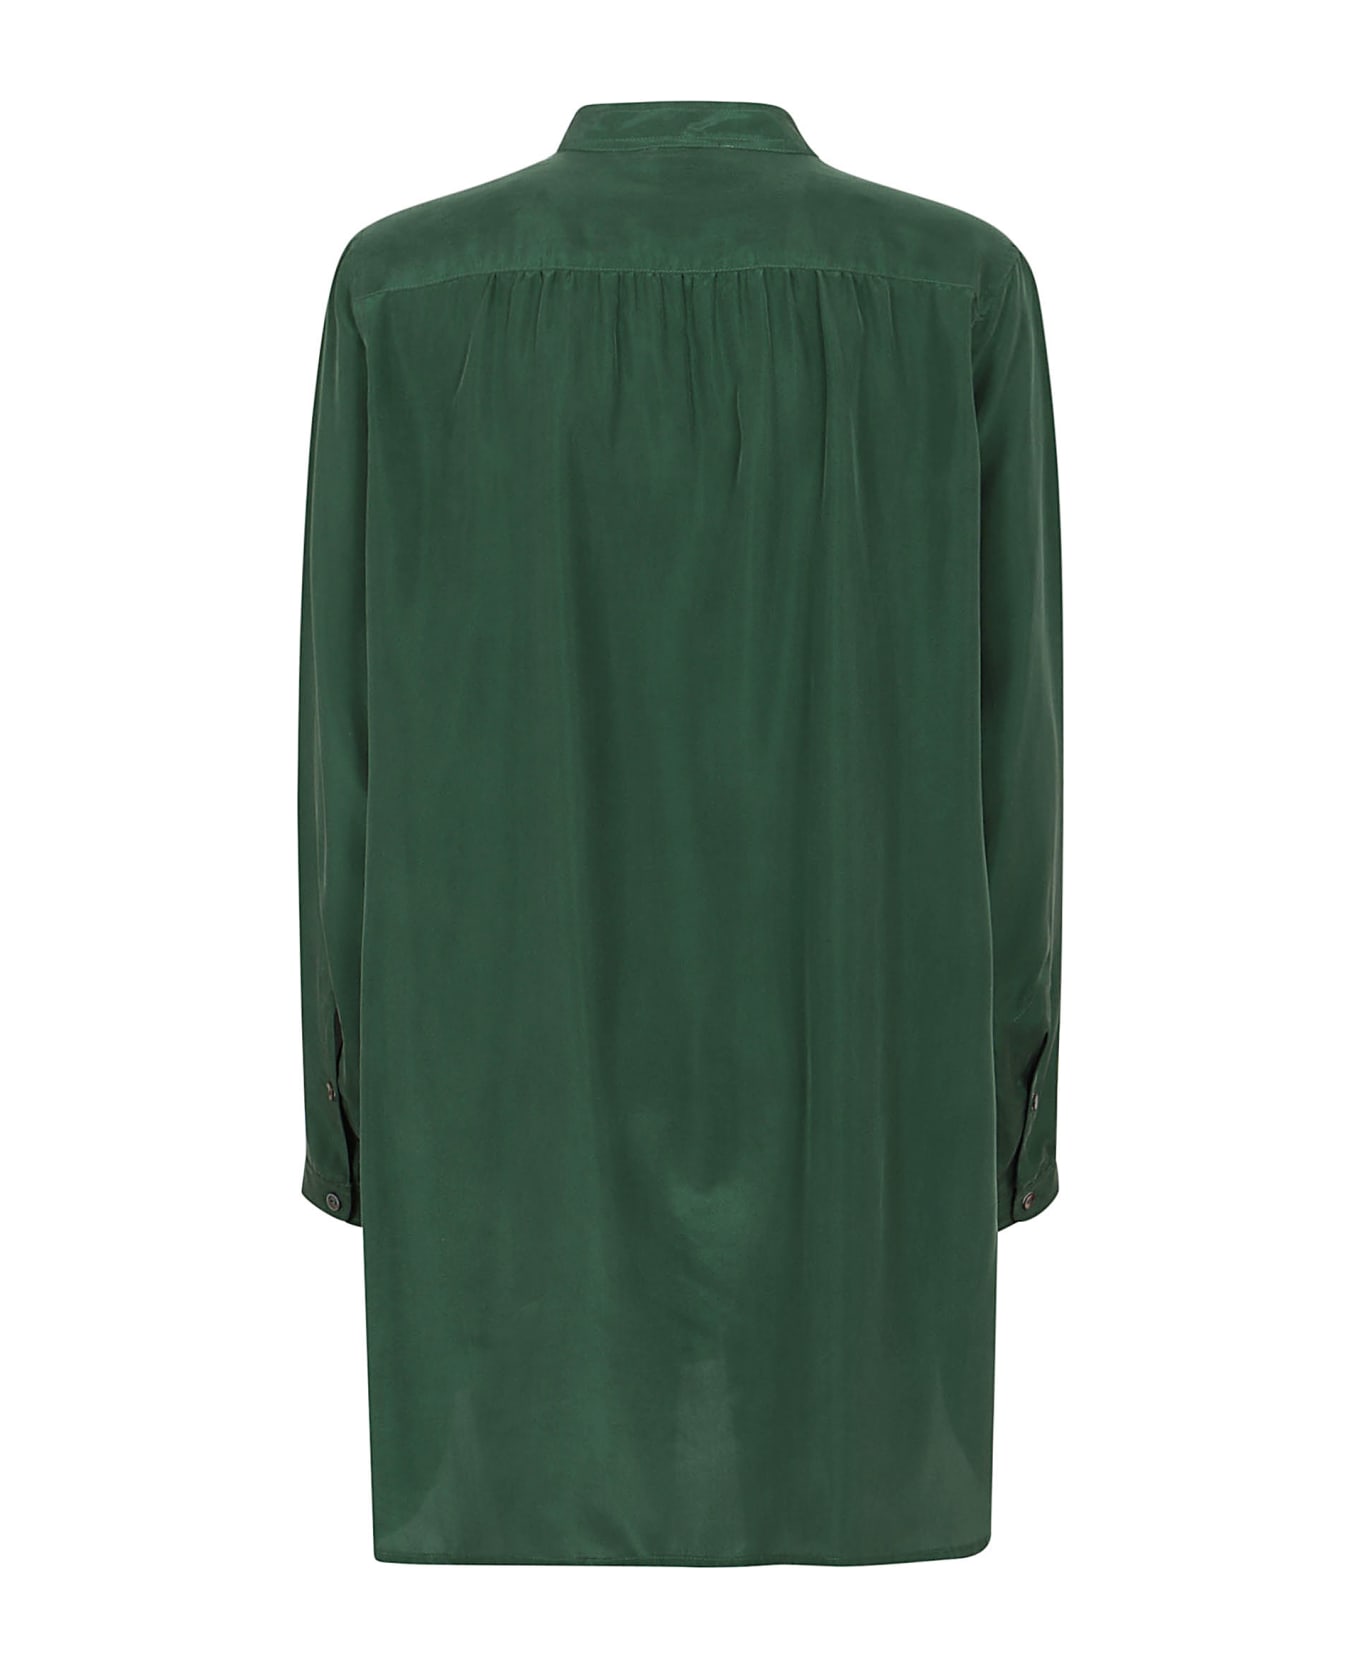 Parosh Dress - Verde シャツ